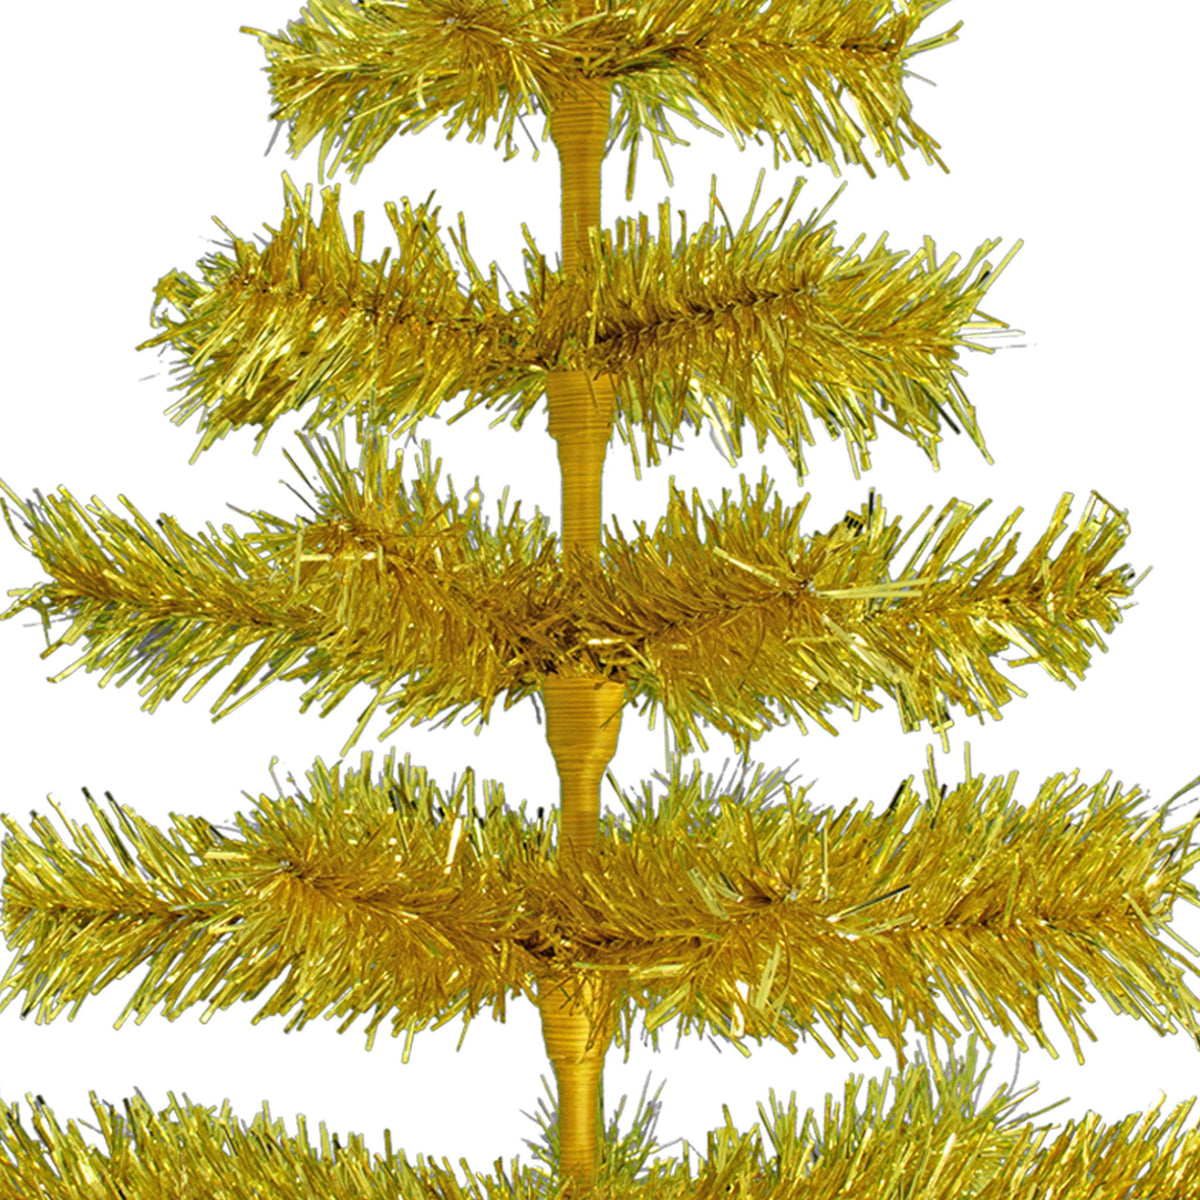 Gold Tinsel Christmas Tree